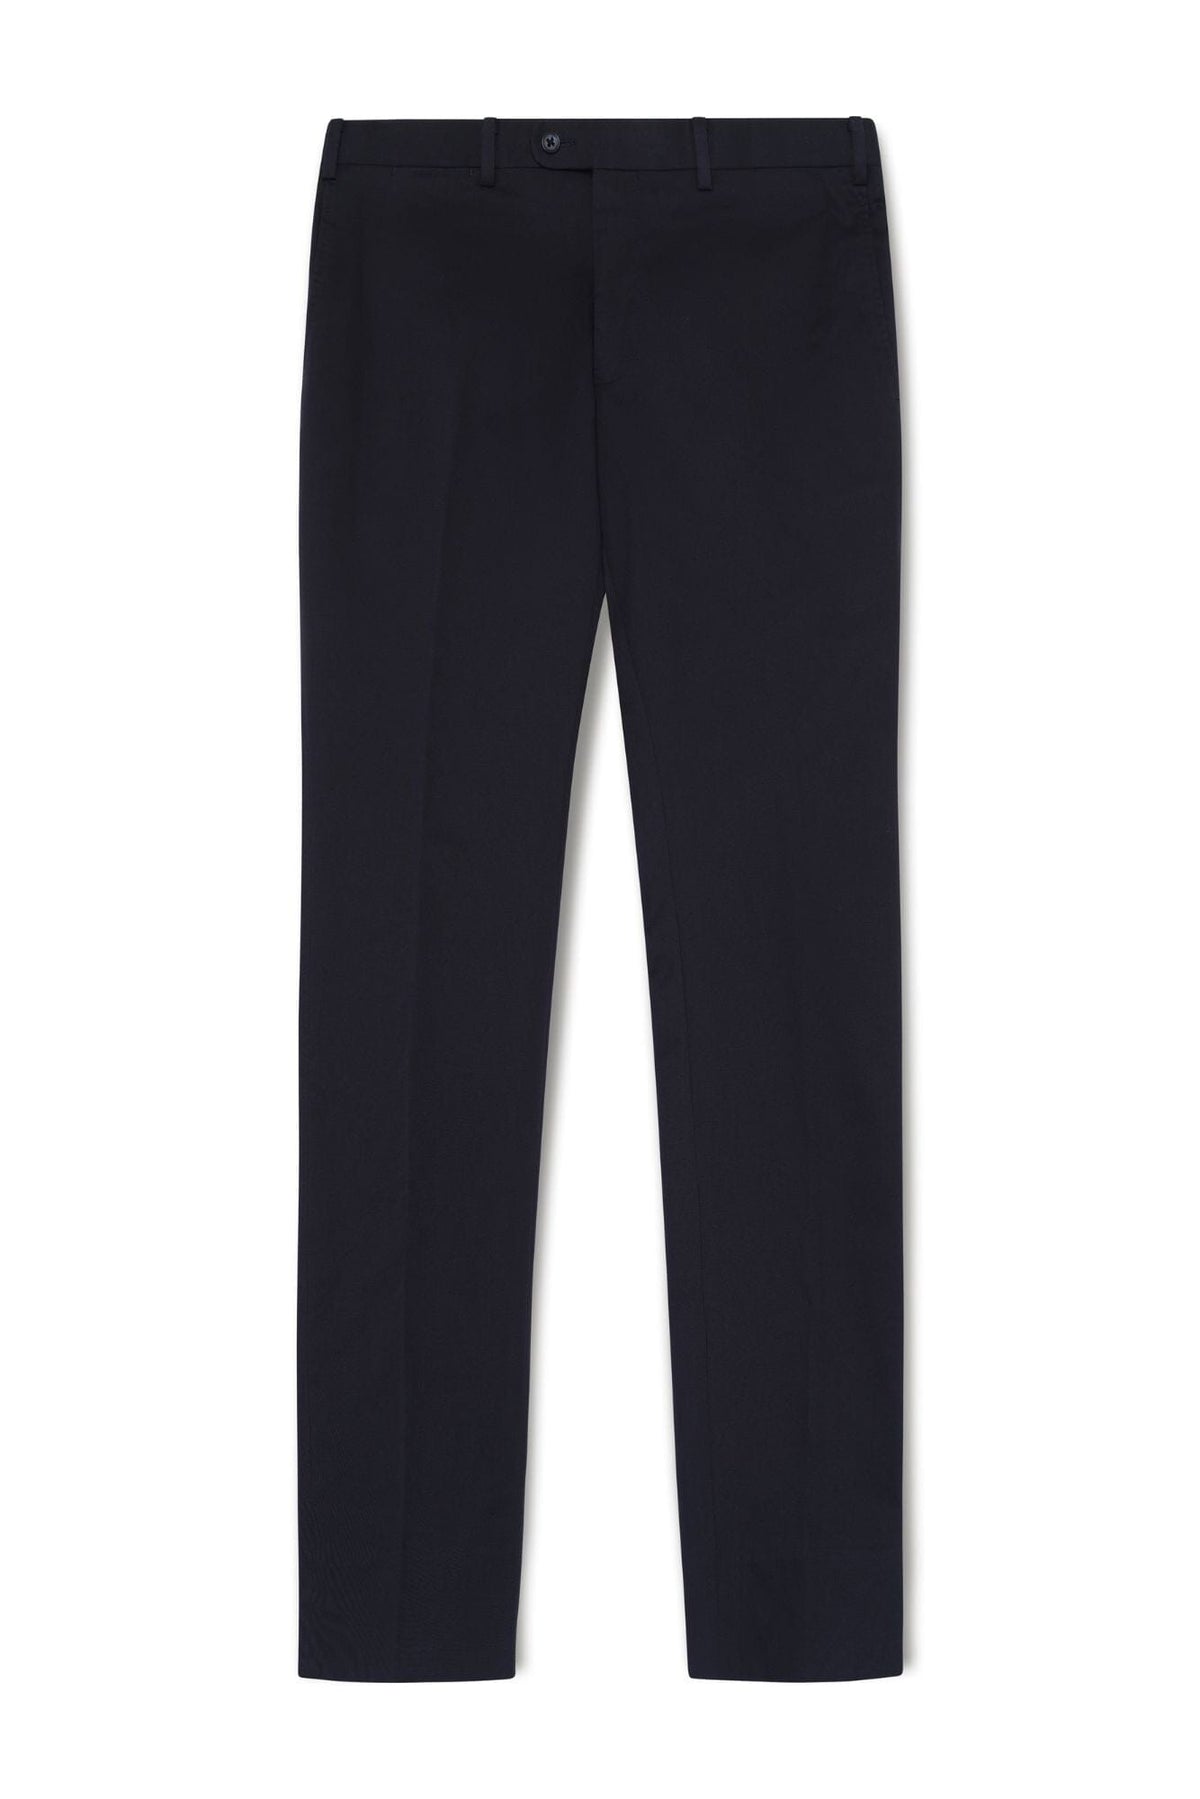 CGC Tailored Pants - Navy Stretch Cotton